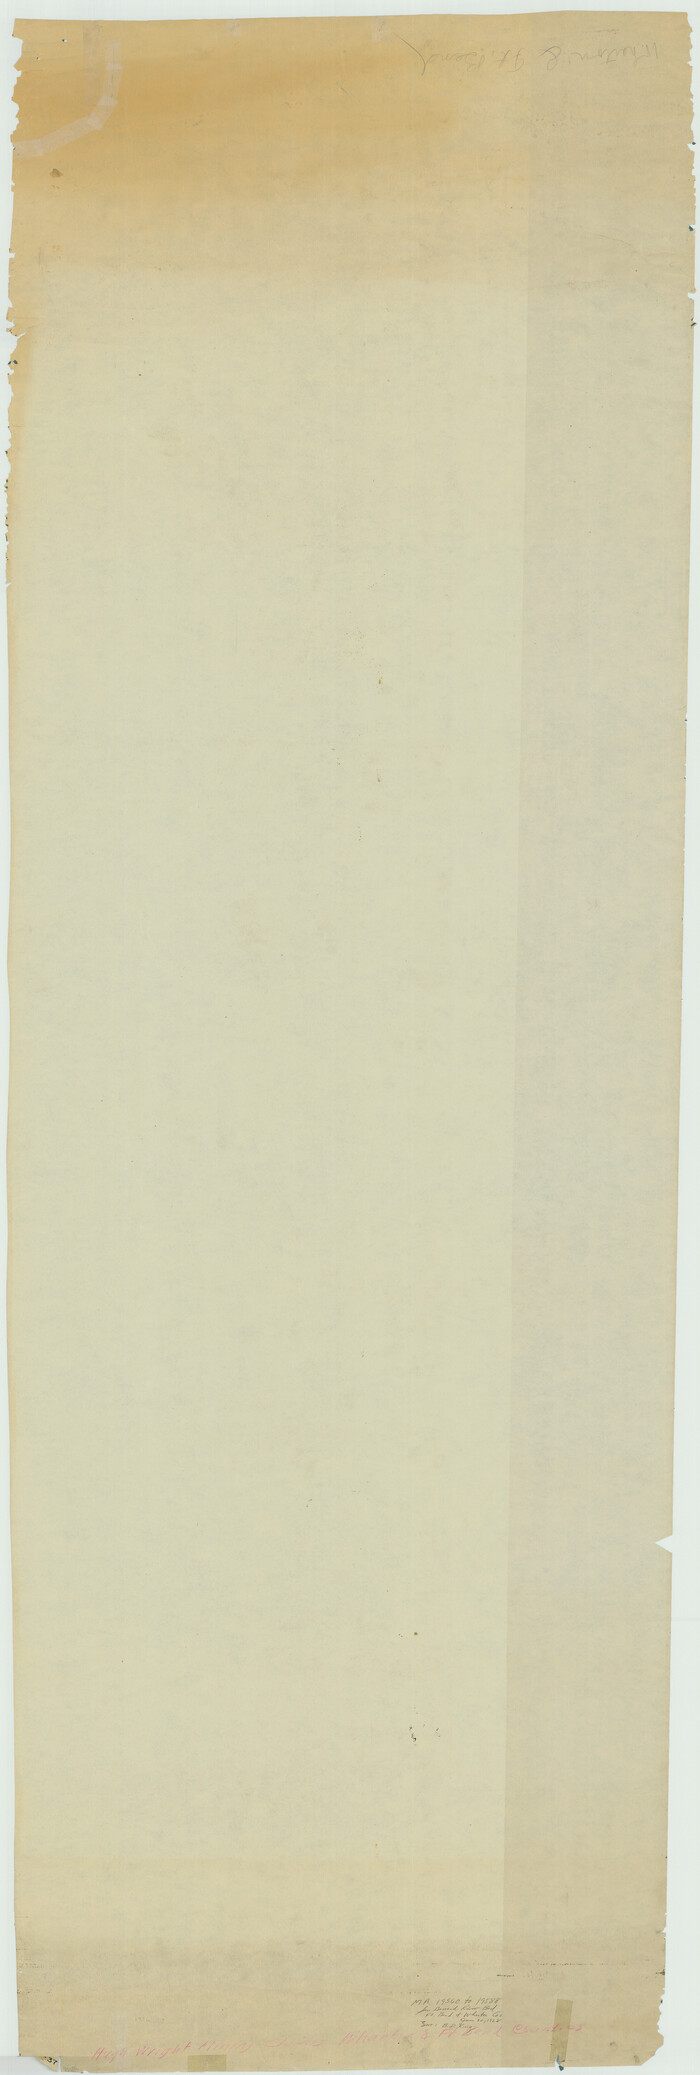 65580, [Sketch for Mineral Application 19560 - 19588 - San Bernard River], General Map Collection